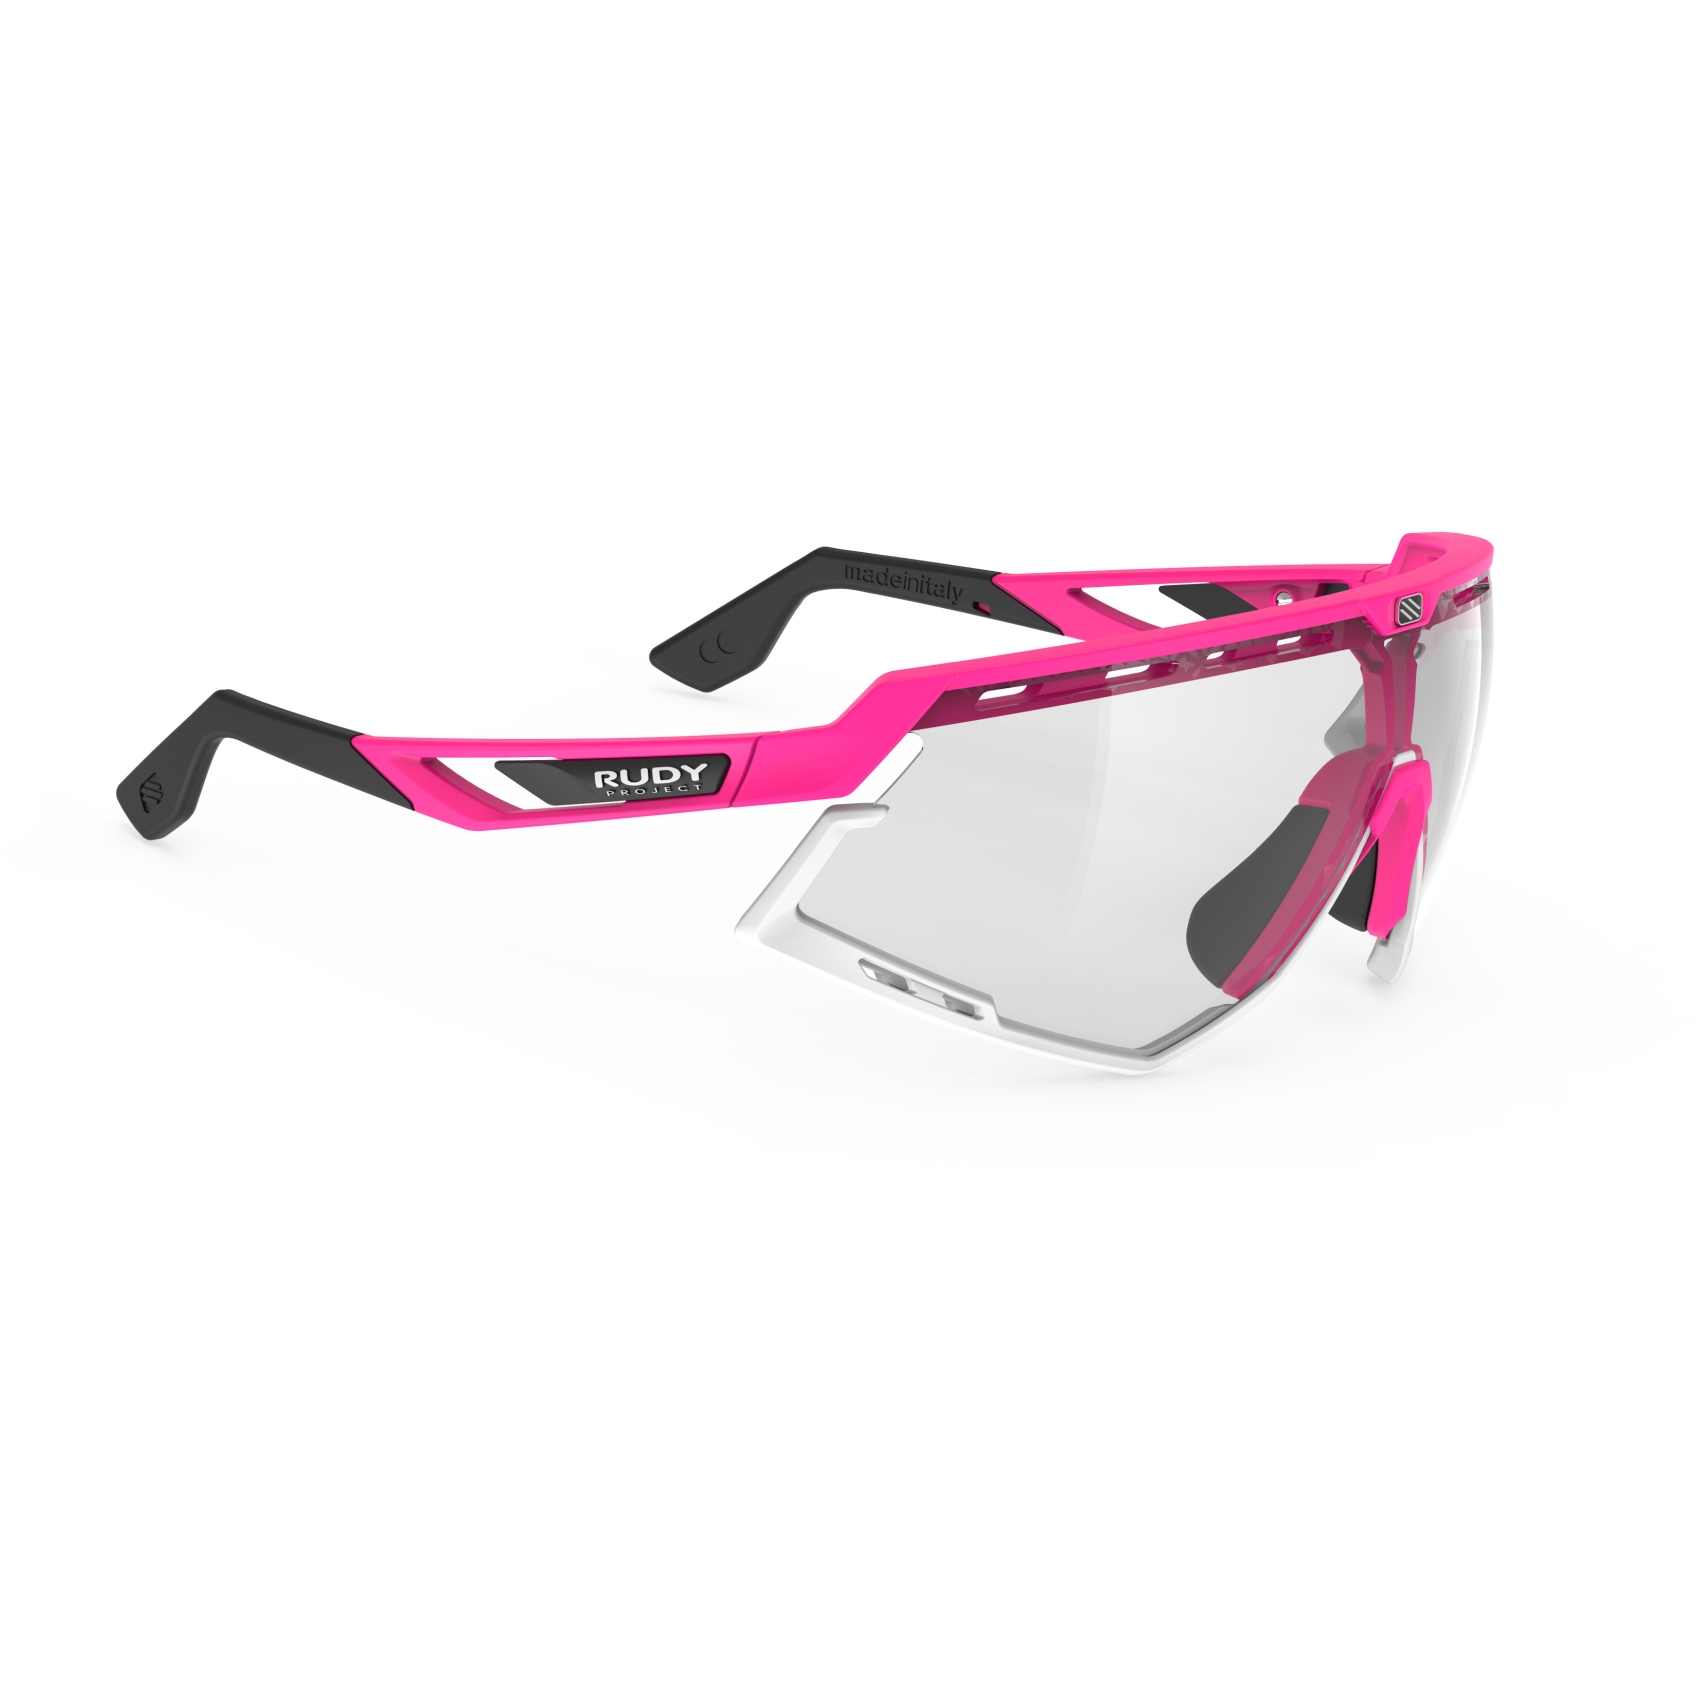 Imagen de Rudy Project Defender Pink Fluo Gafas - Bumpers Black - ImpactX Photochromic 2 Laser Black